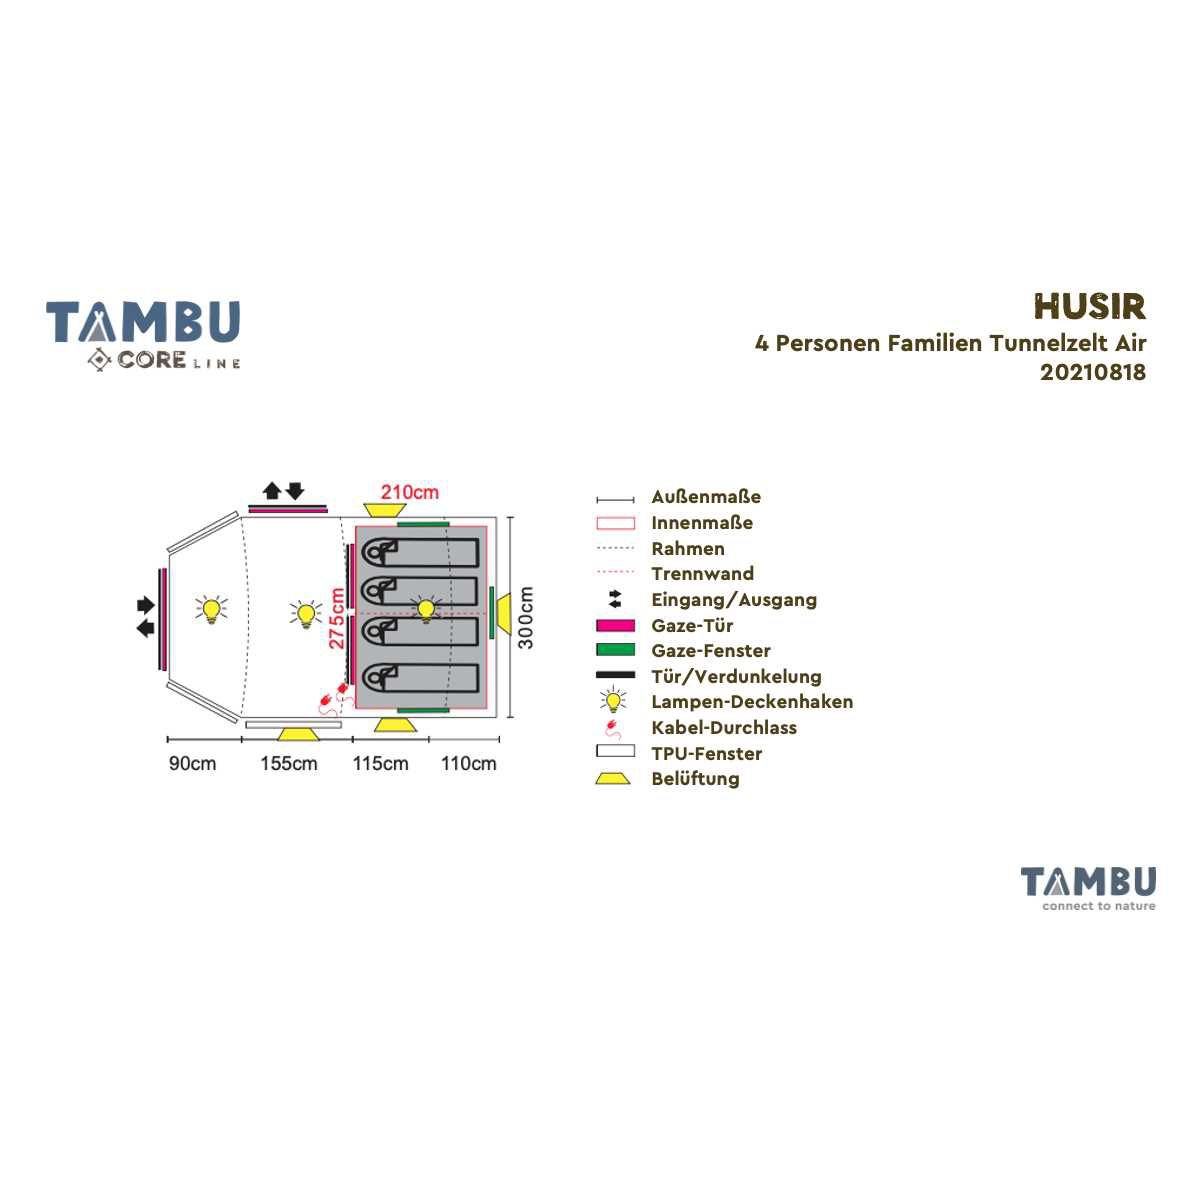 TAMBU HUSIR Air Familien Tunnelzelt Beige 4 Personen - 20210818